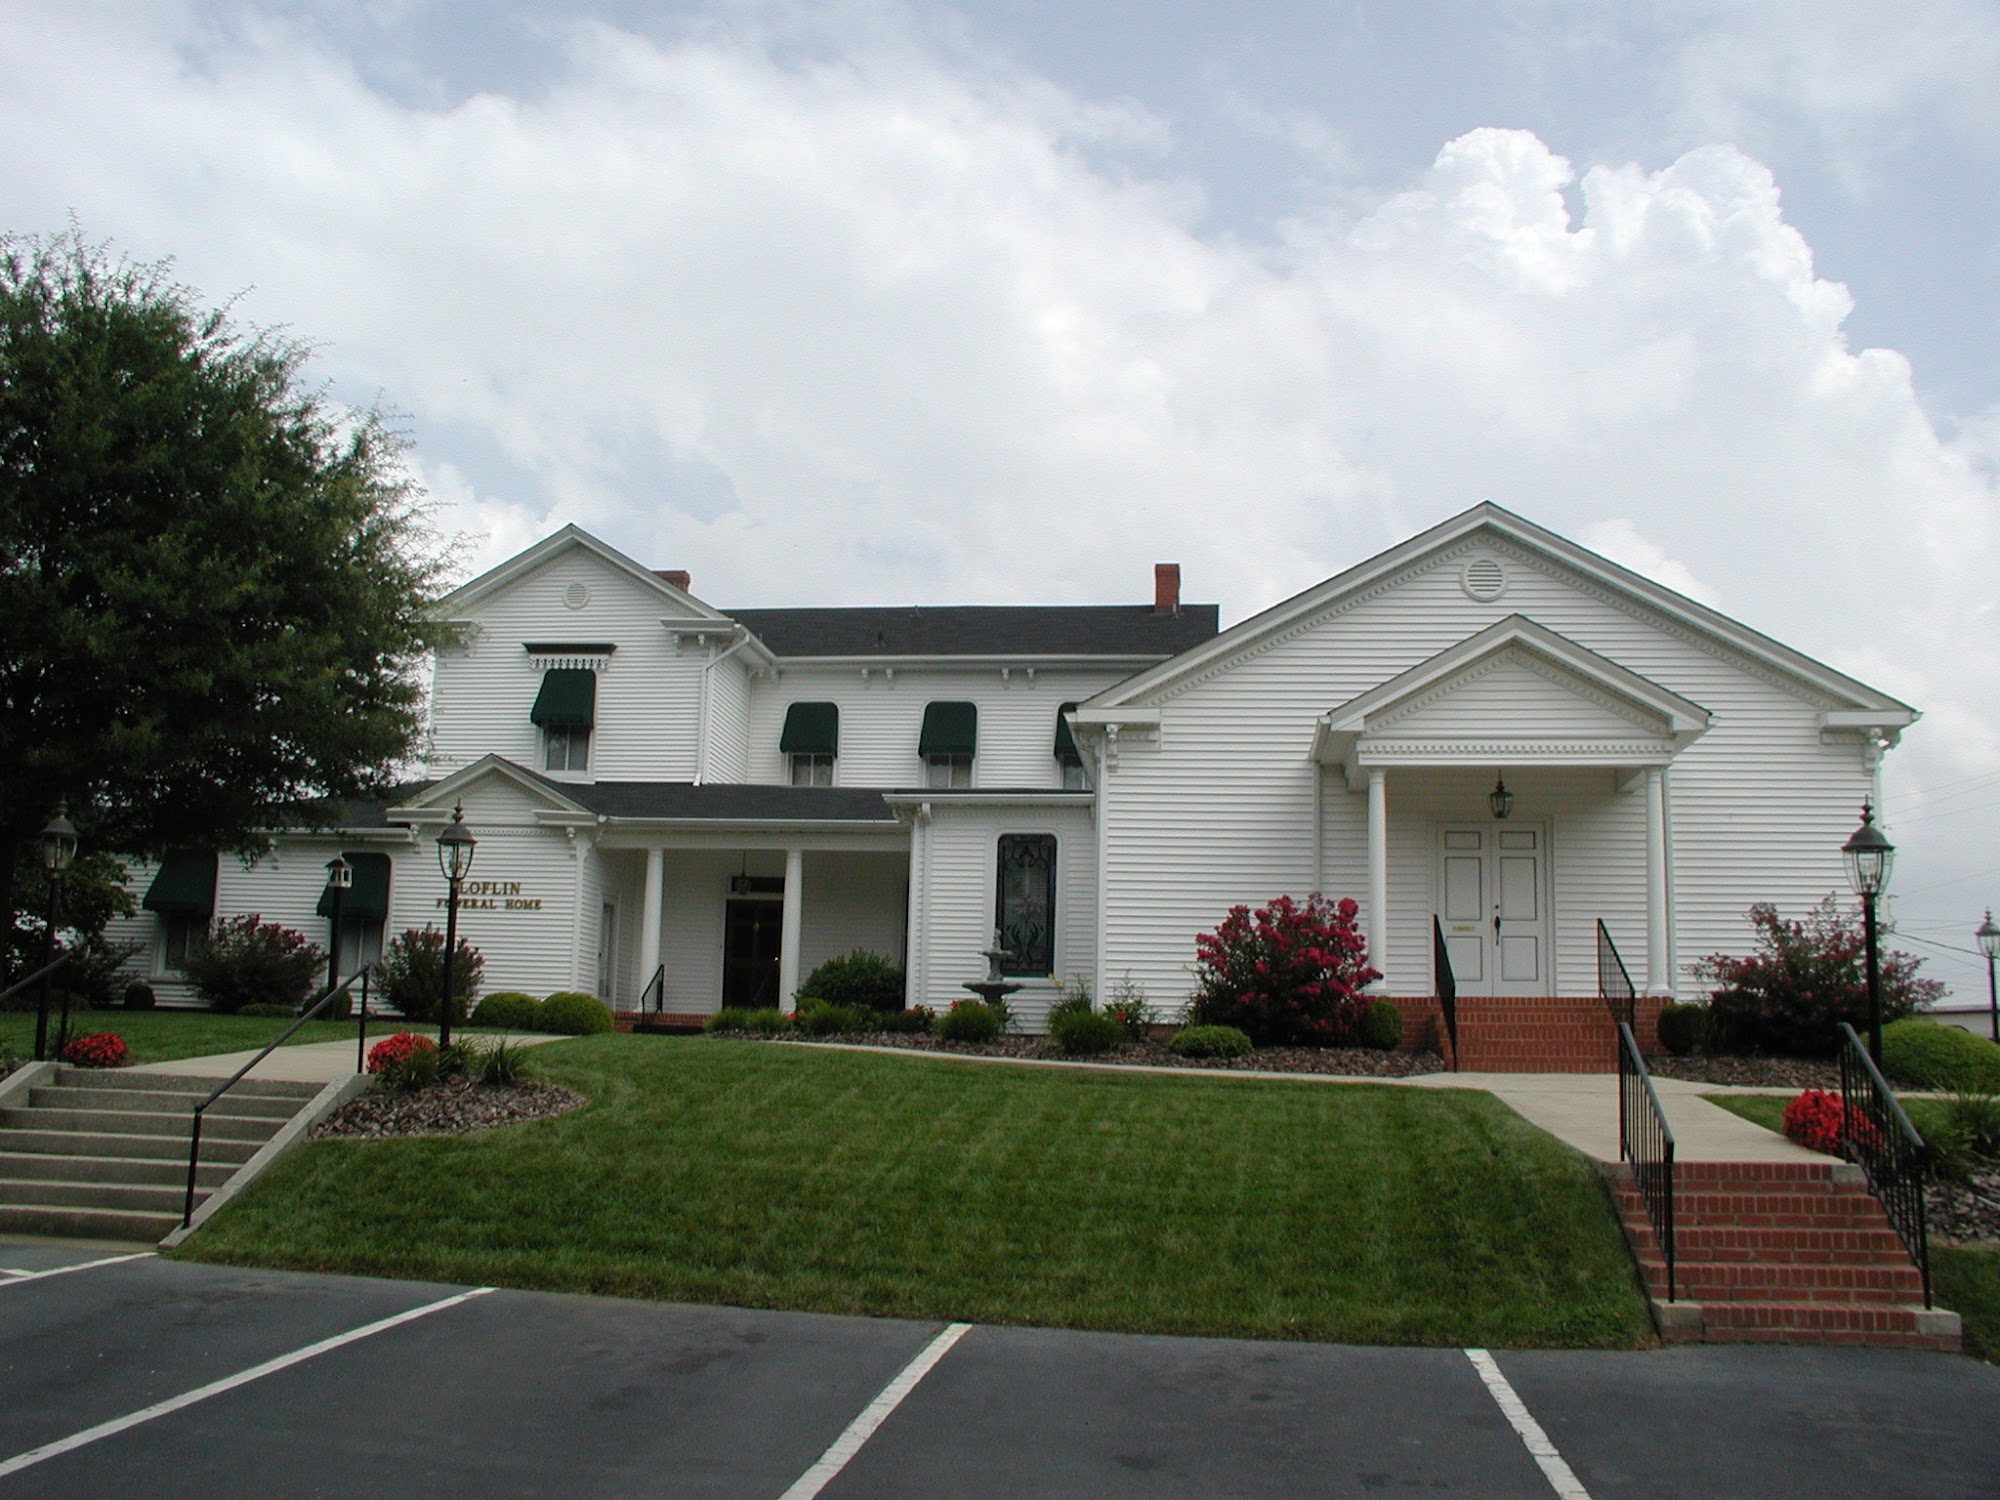 Loflin Funeral Home & Cremation Service 147 Coleridge Rd, Ramseur North Carolina 27316